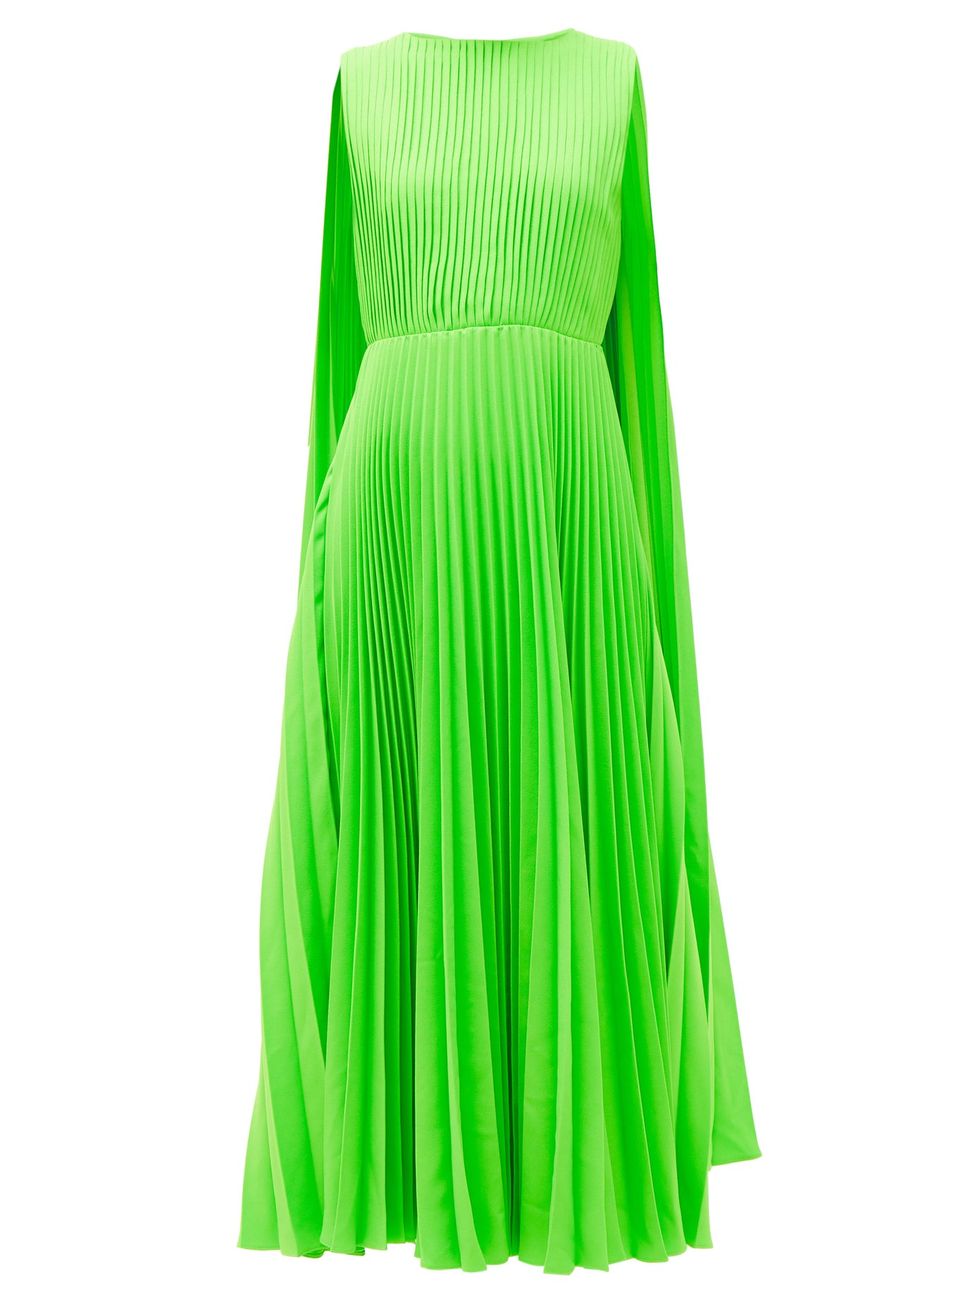 Melania Trump's green screen dress goes viral | Valentino gown